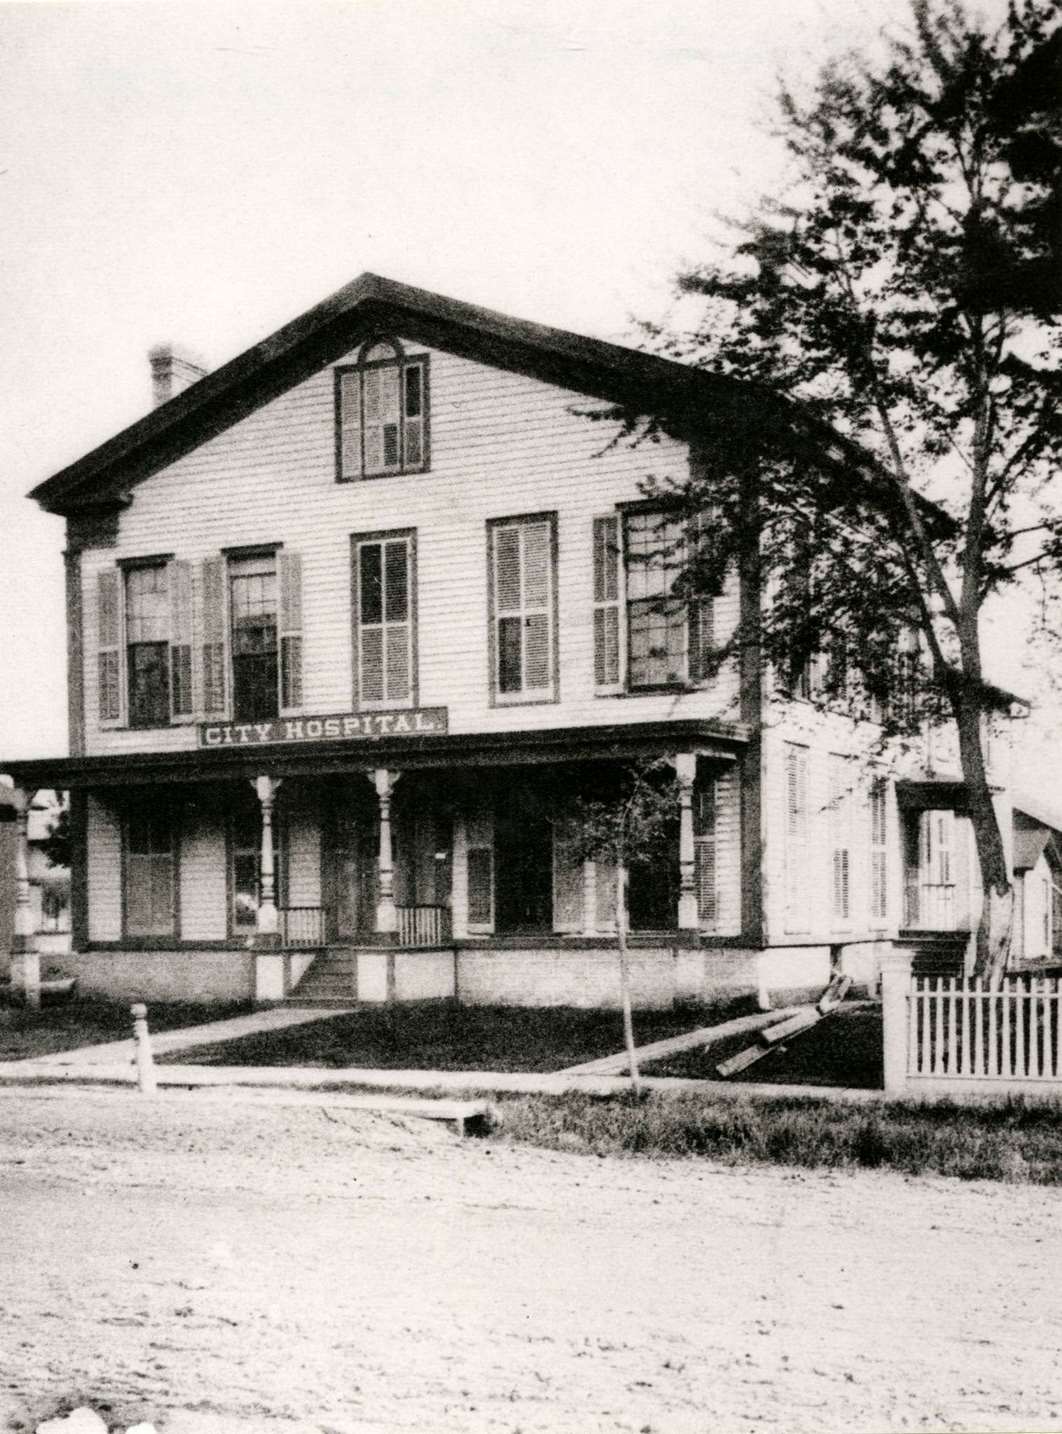 View across street of City Hospital, Janesville, Wisconsin, 1892.